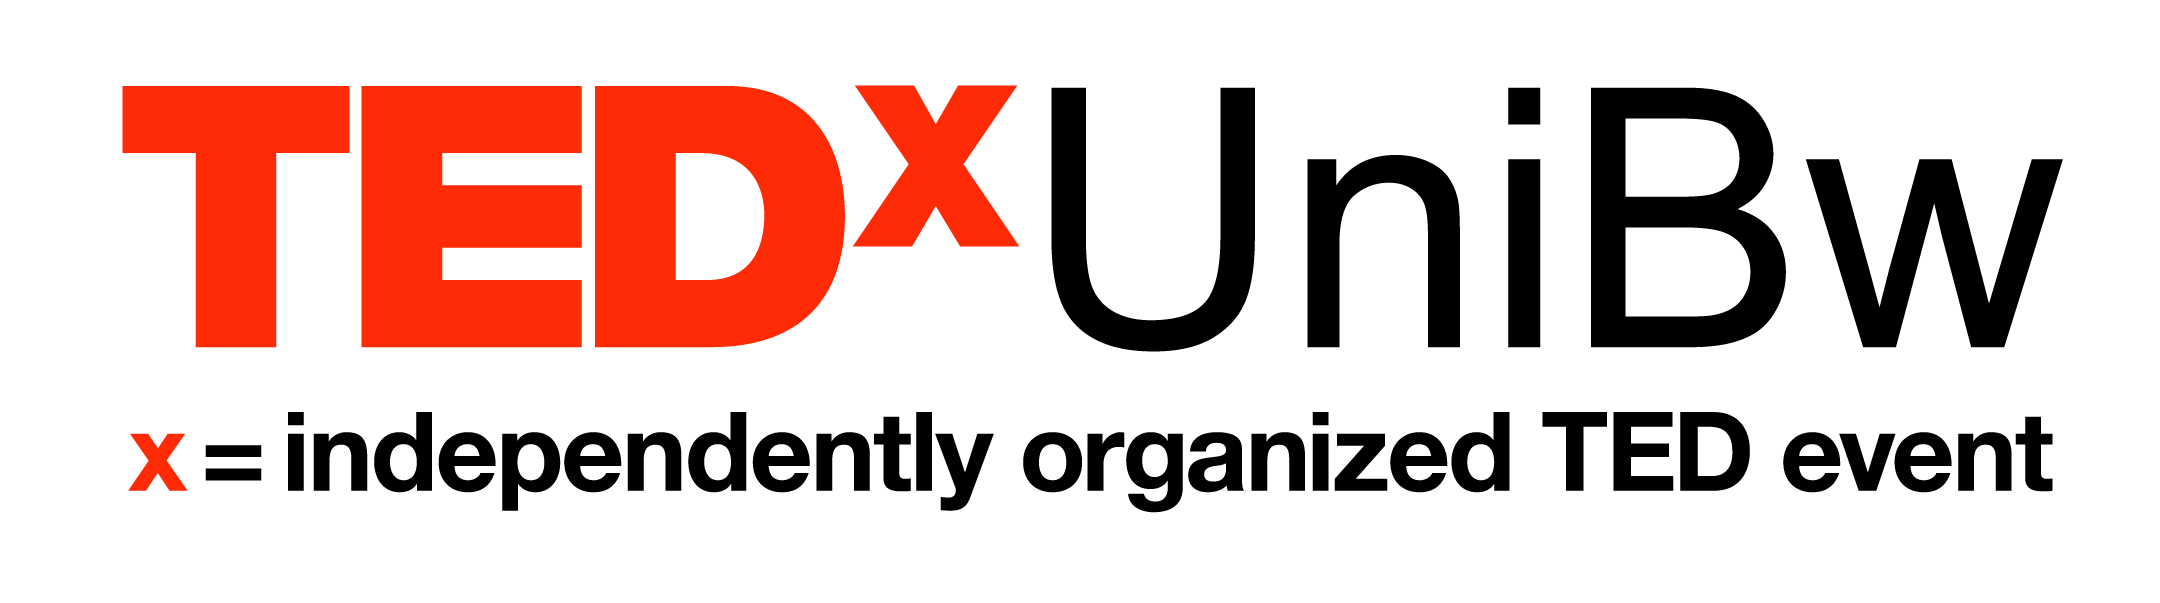 Logo_TEDxUniBw_transparent_Schwarz.png